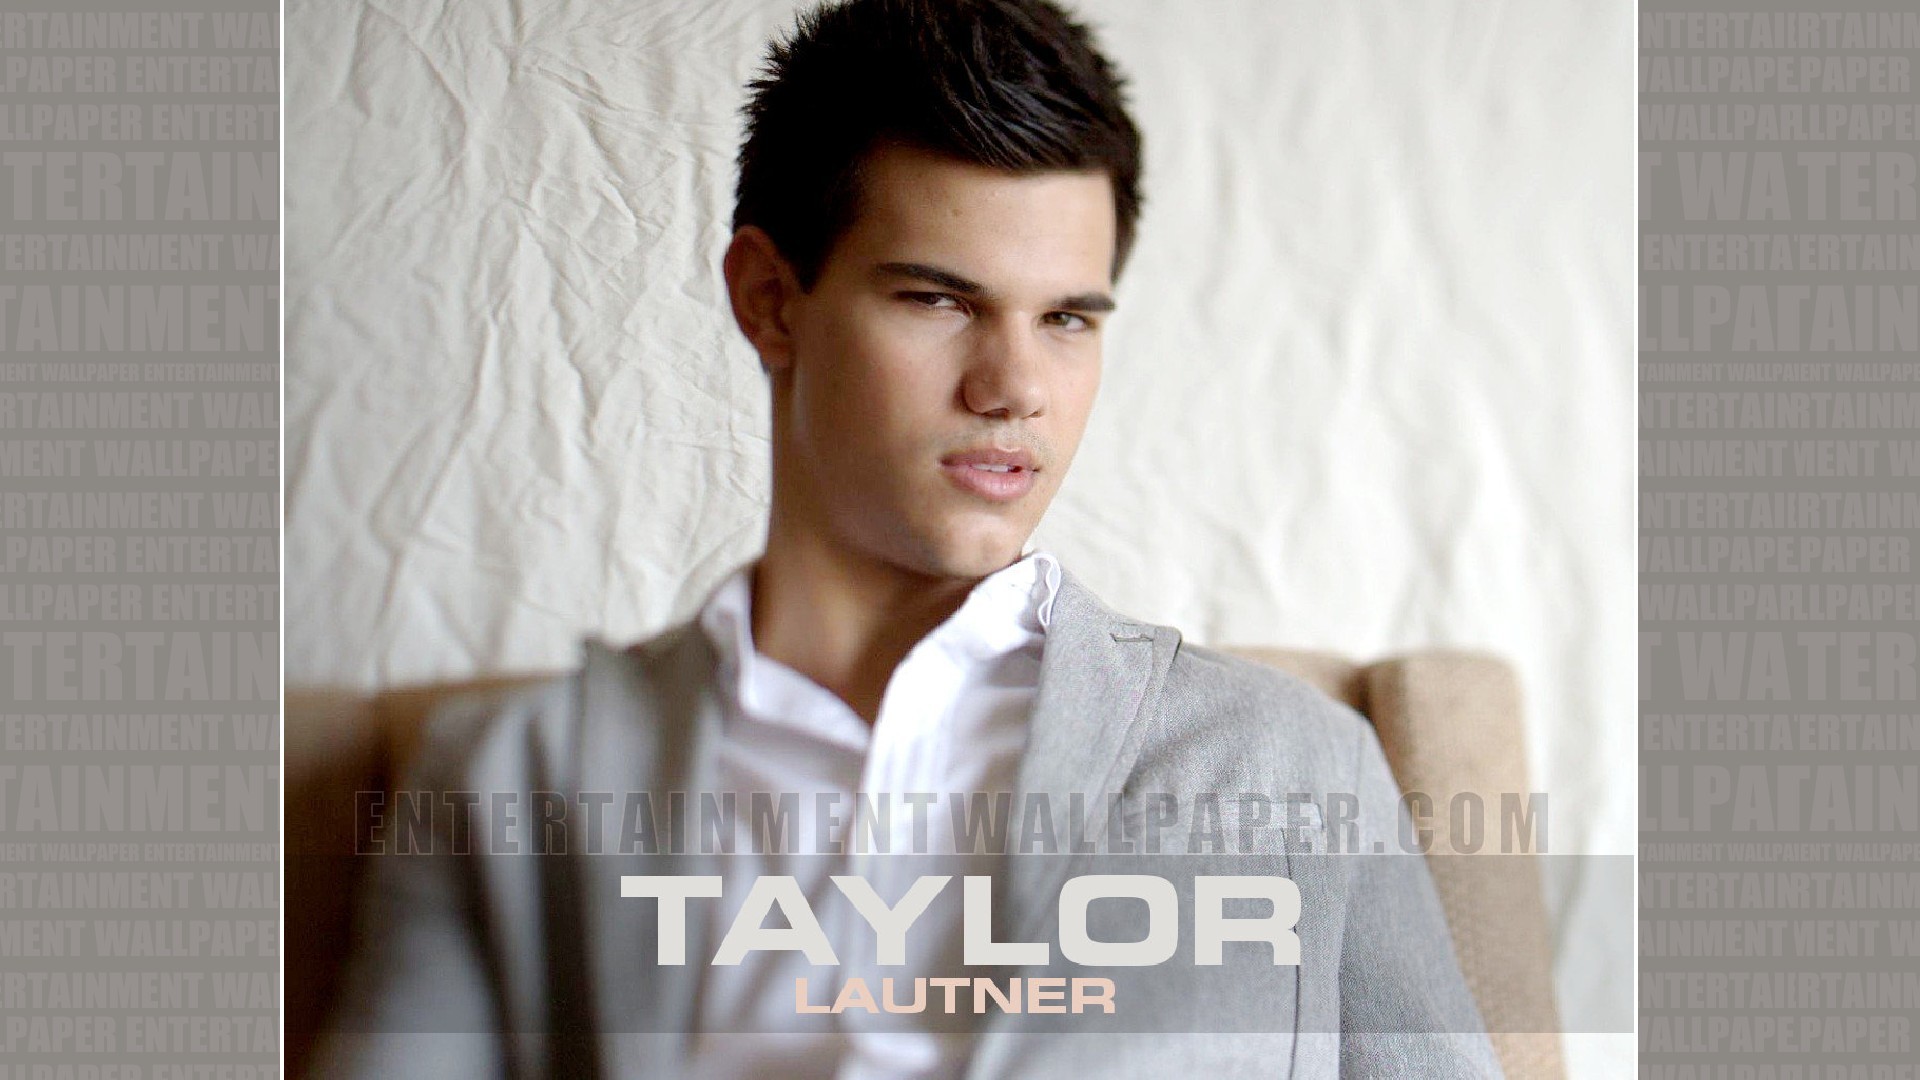 1920x1080 Taylor Lautner Wallpaper - Original size, download now.